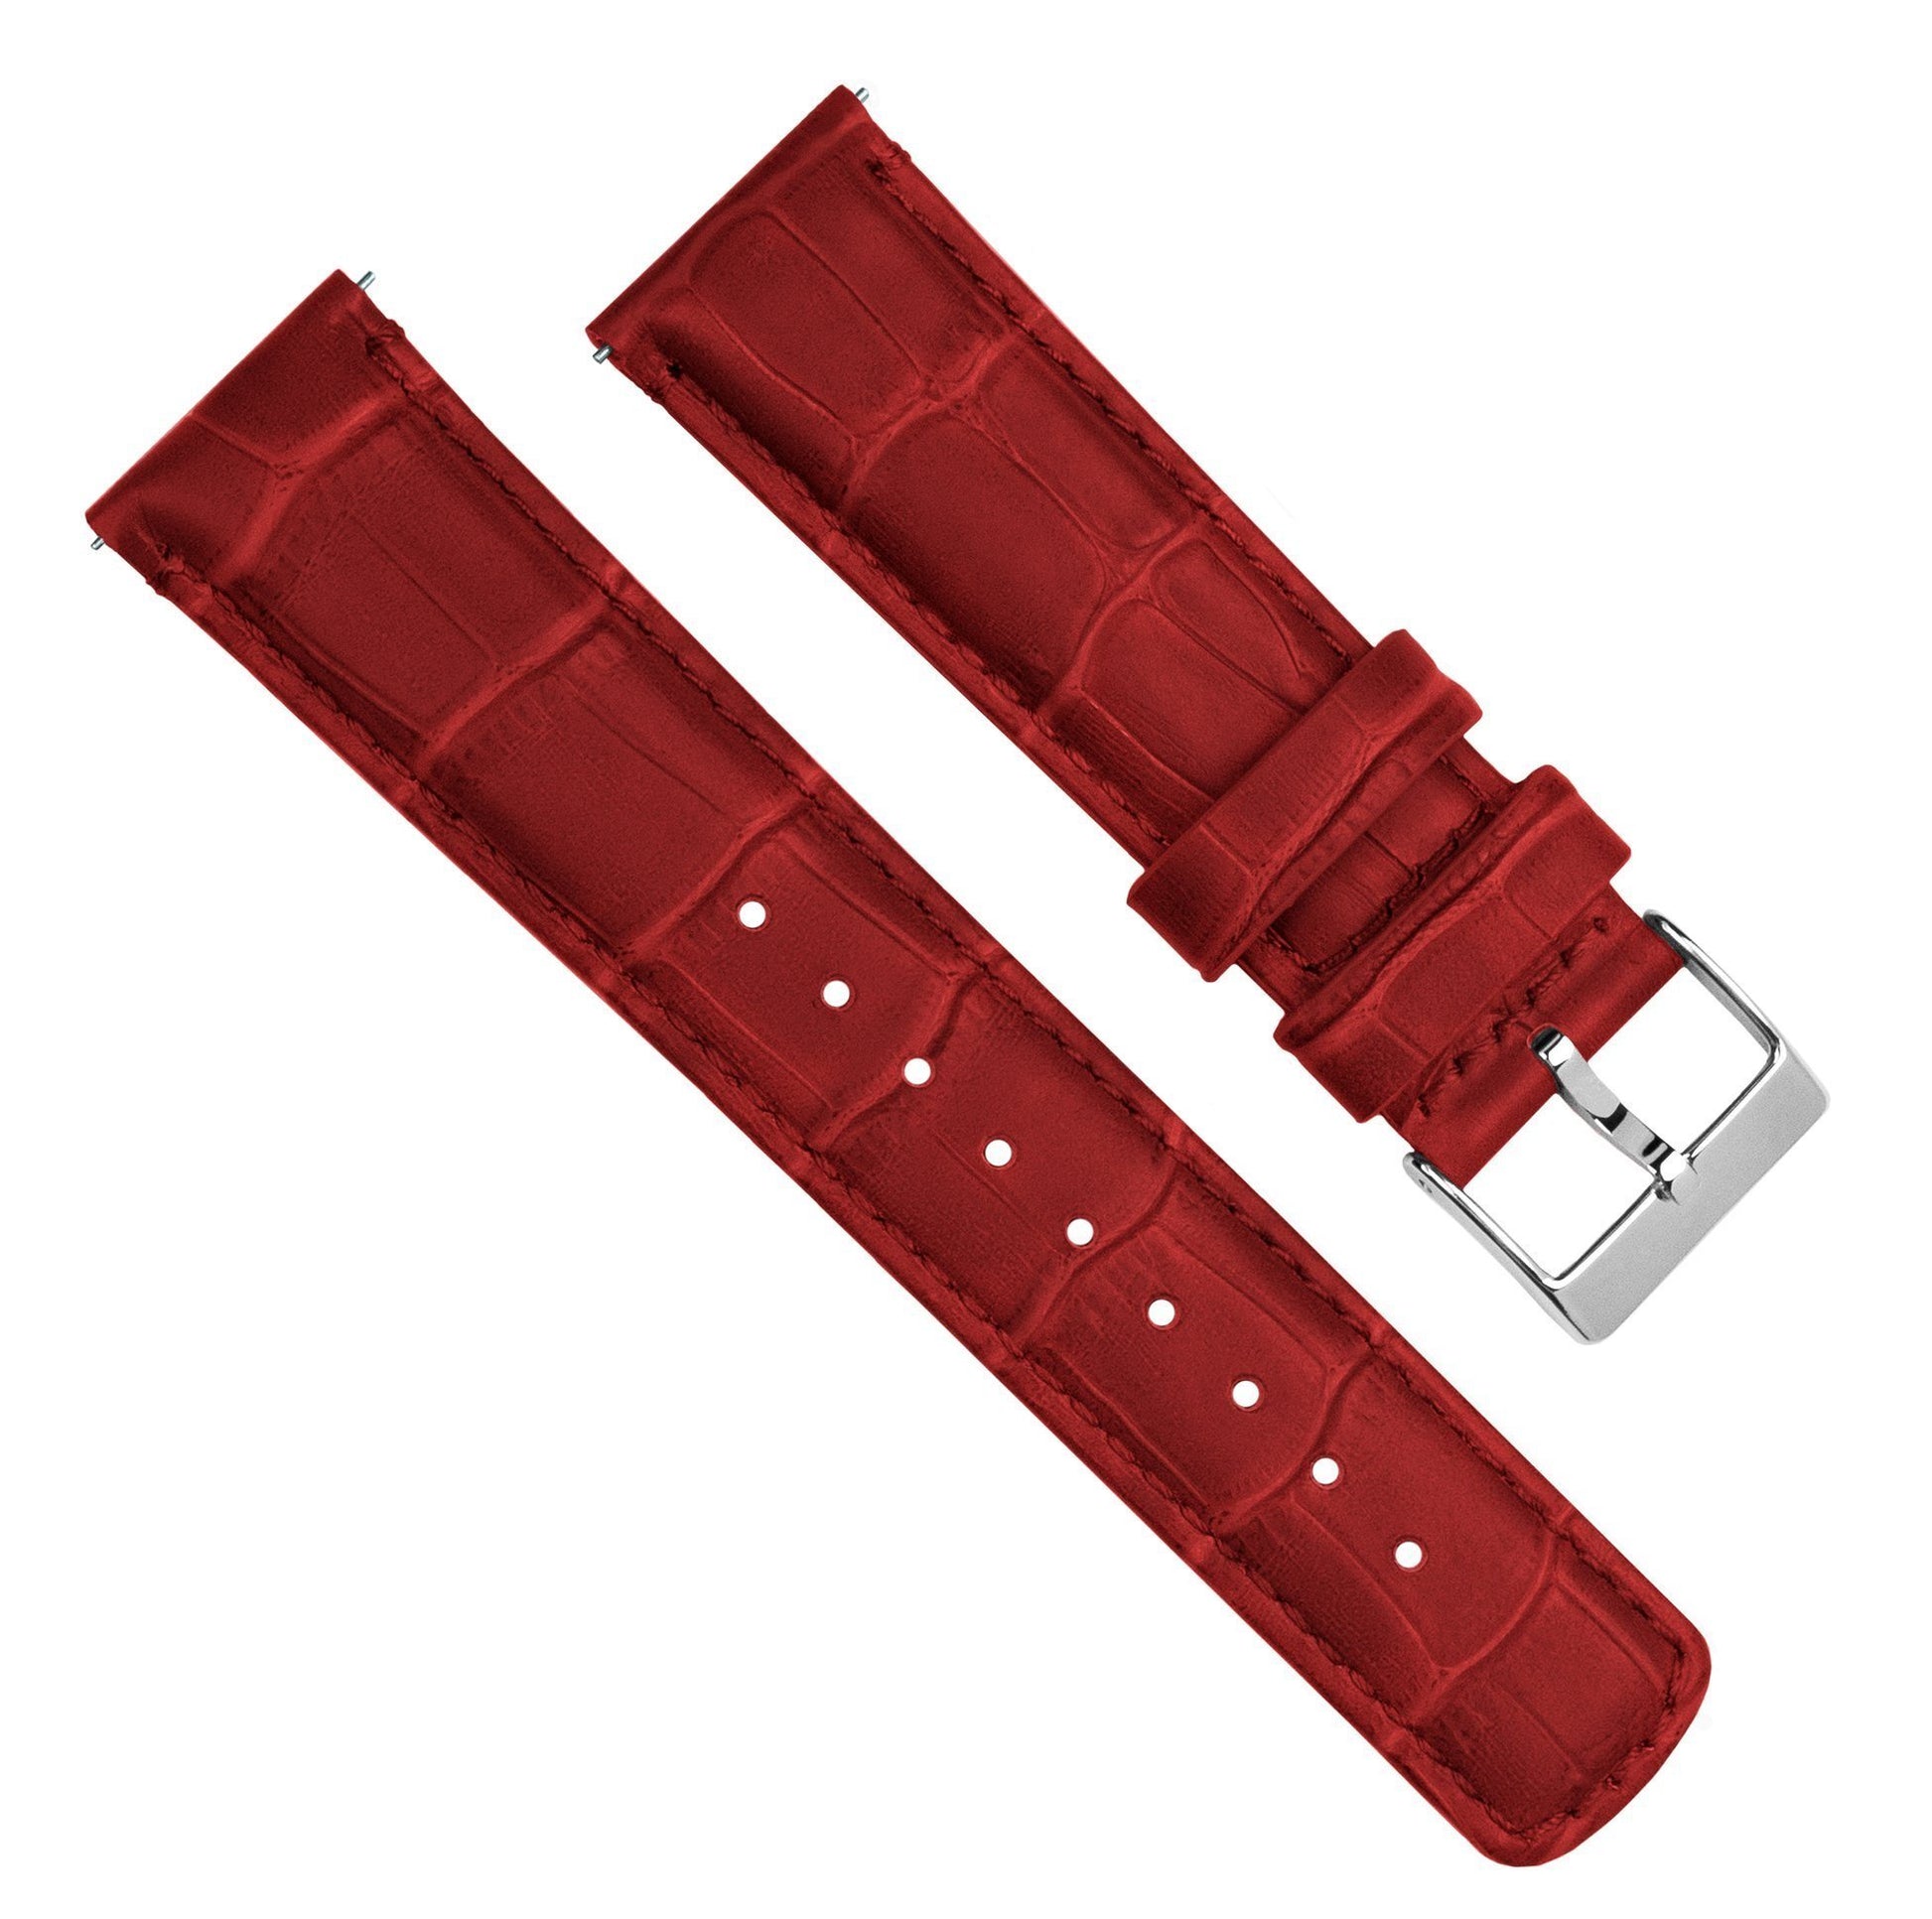 Fossil Q | Crimson Red Alligator Grain Leather - Barton Watch Bands